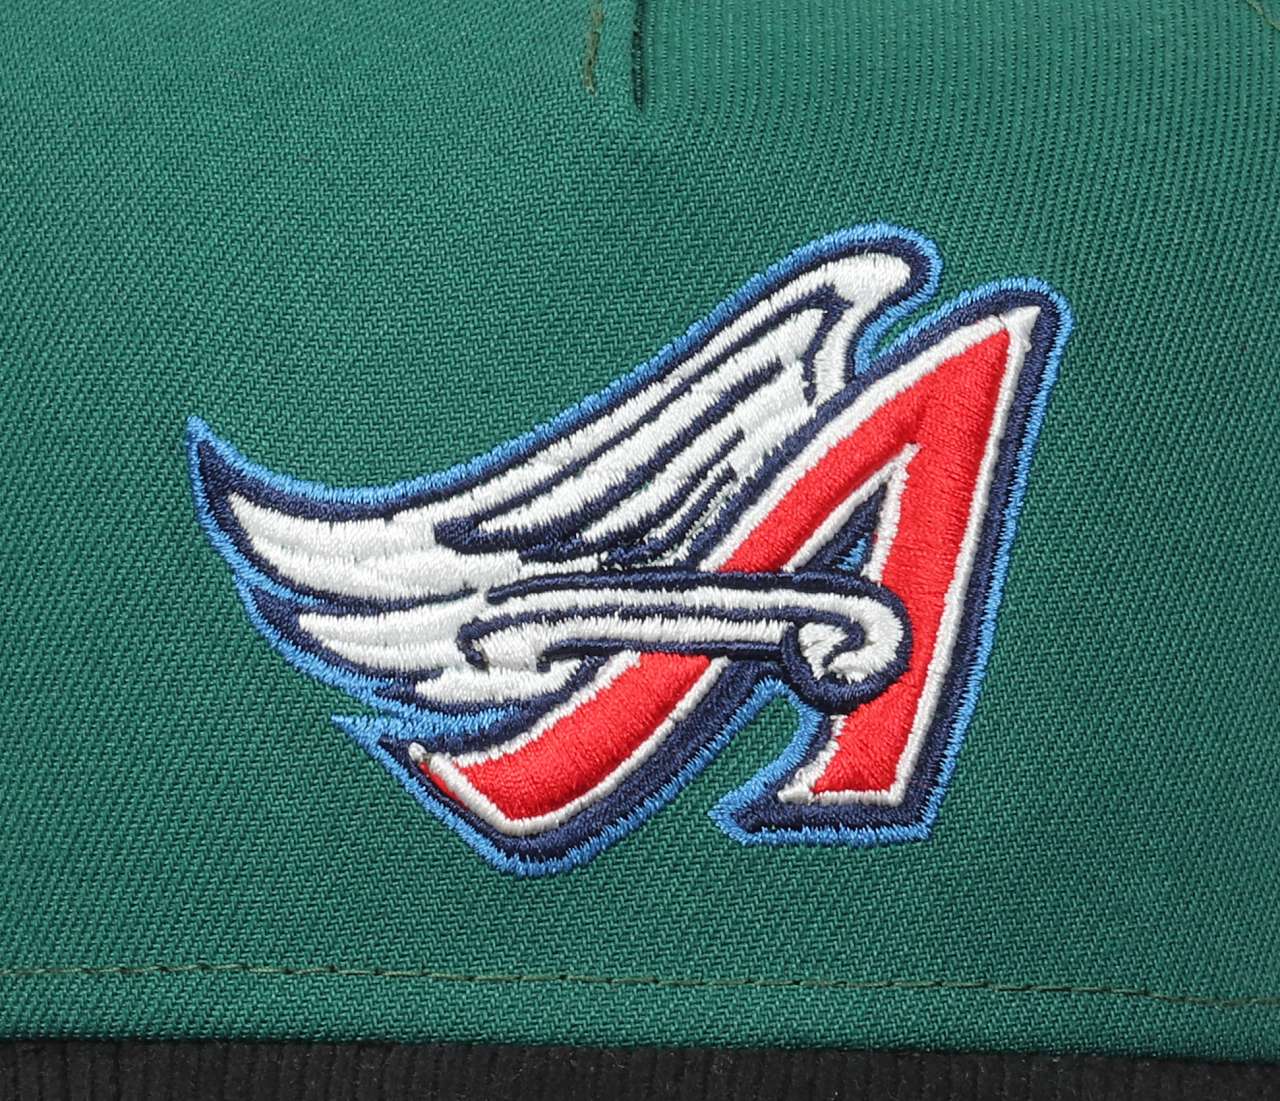 Anaheim Angels MLB 40th Season Sidepatch Green Black Cord 9Forty A-Frame Snapback Cap New Era